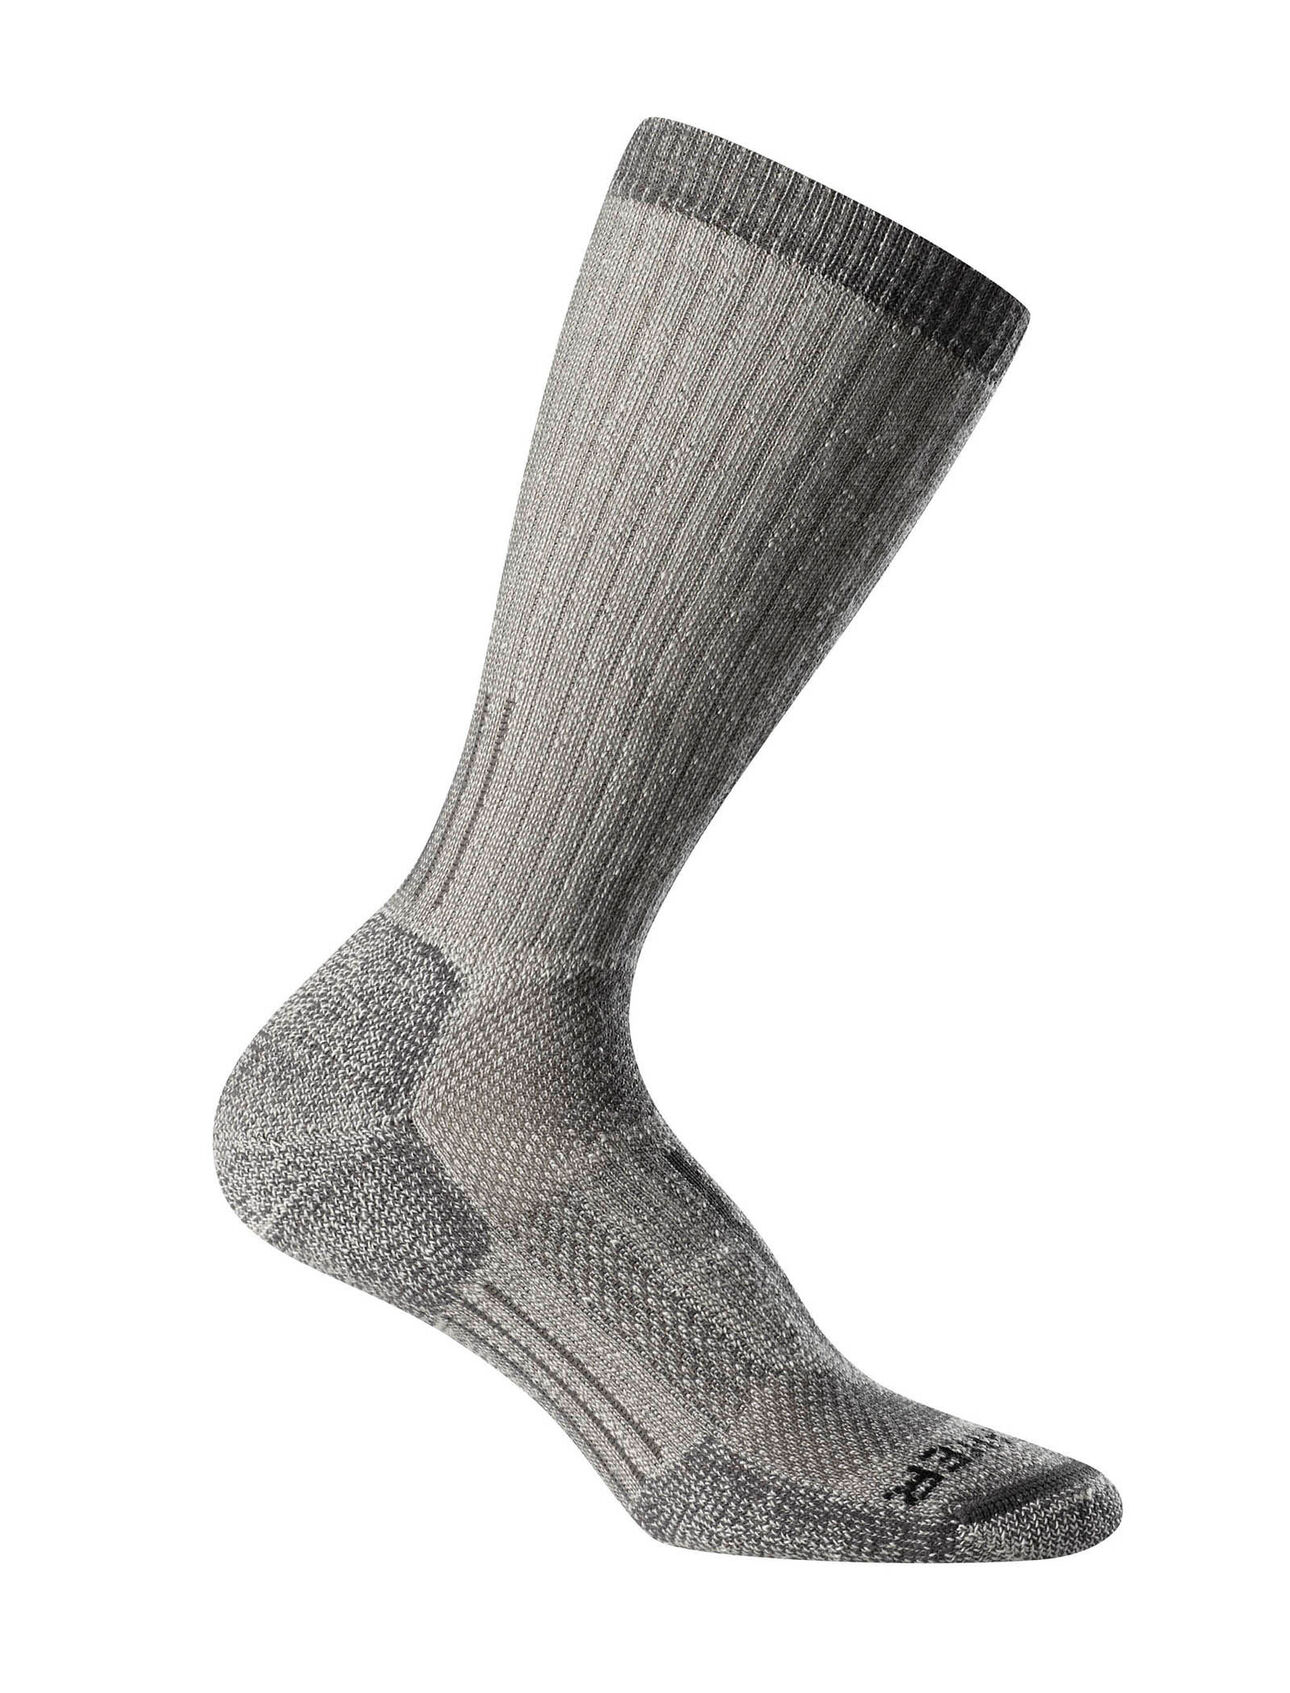 Merino Mountaineer Mid Calf Socks